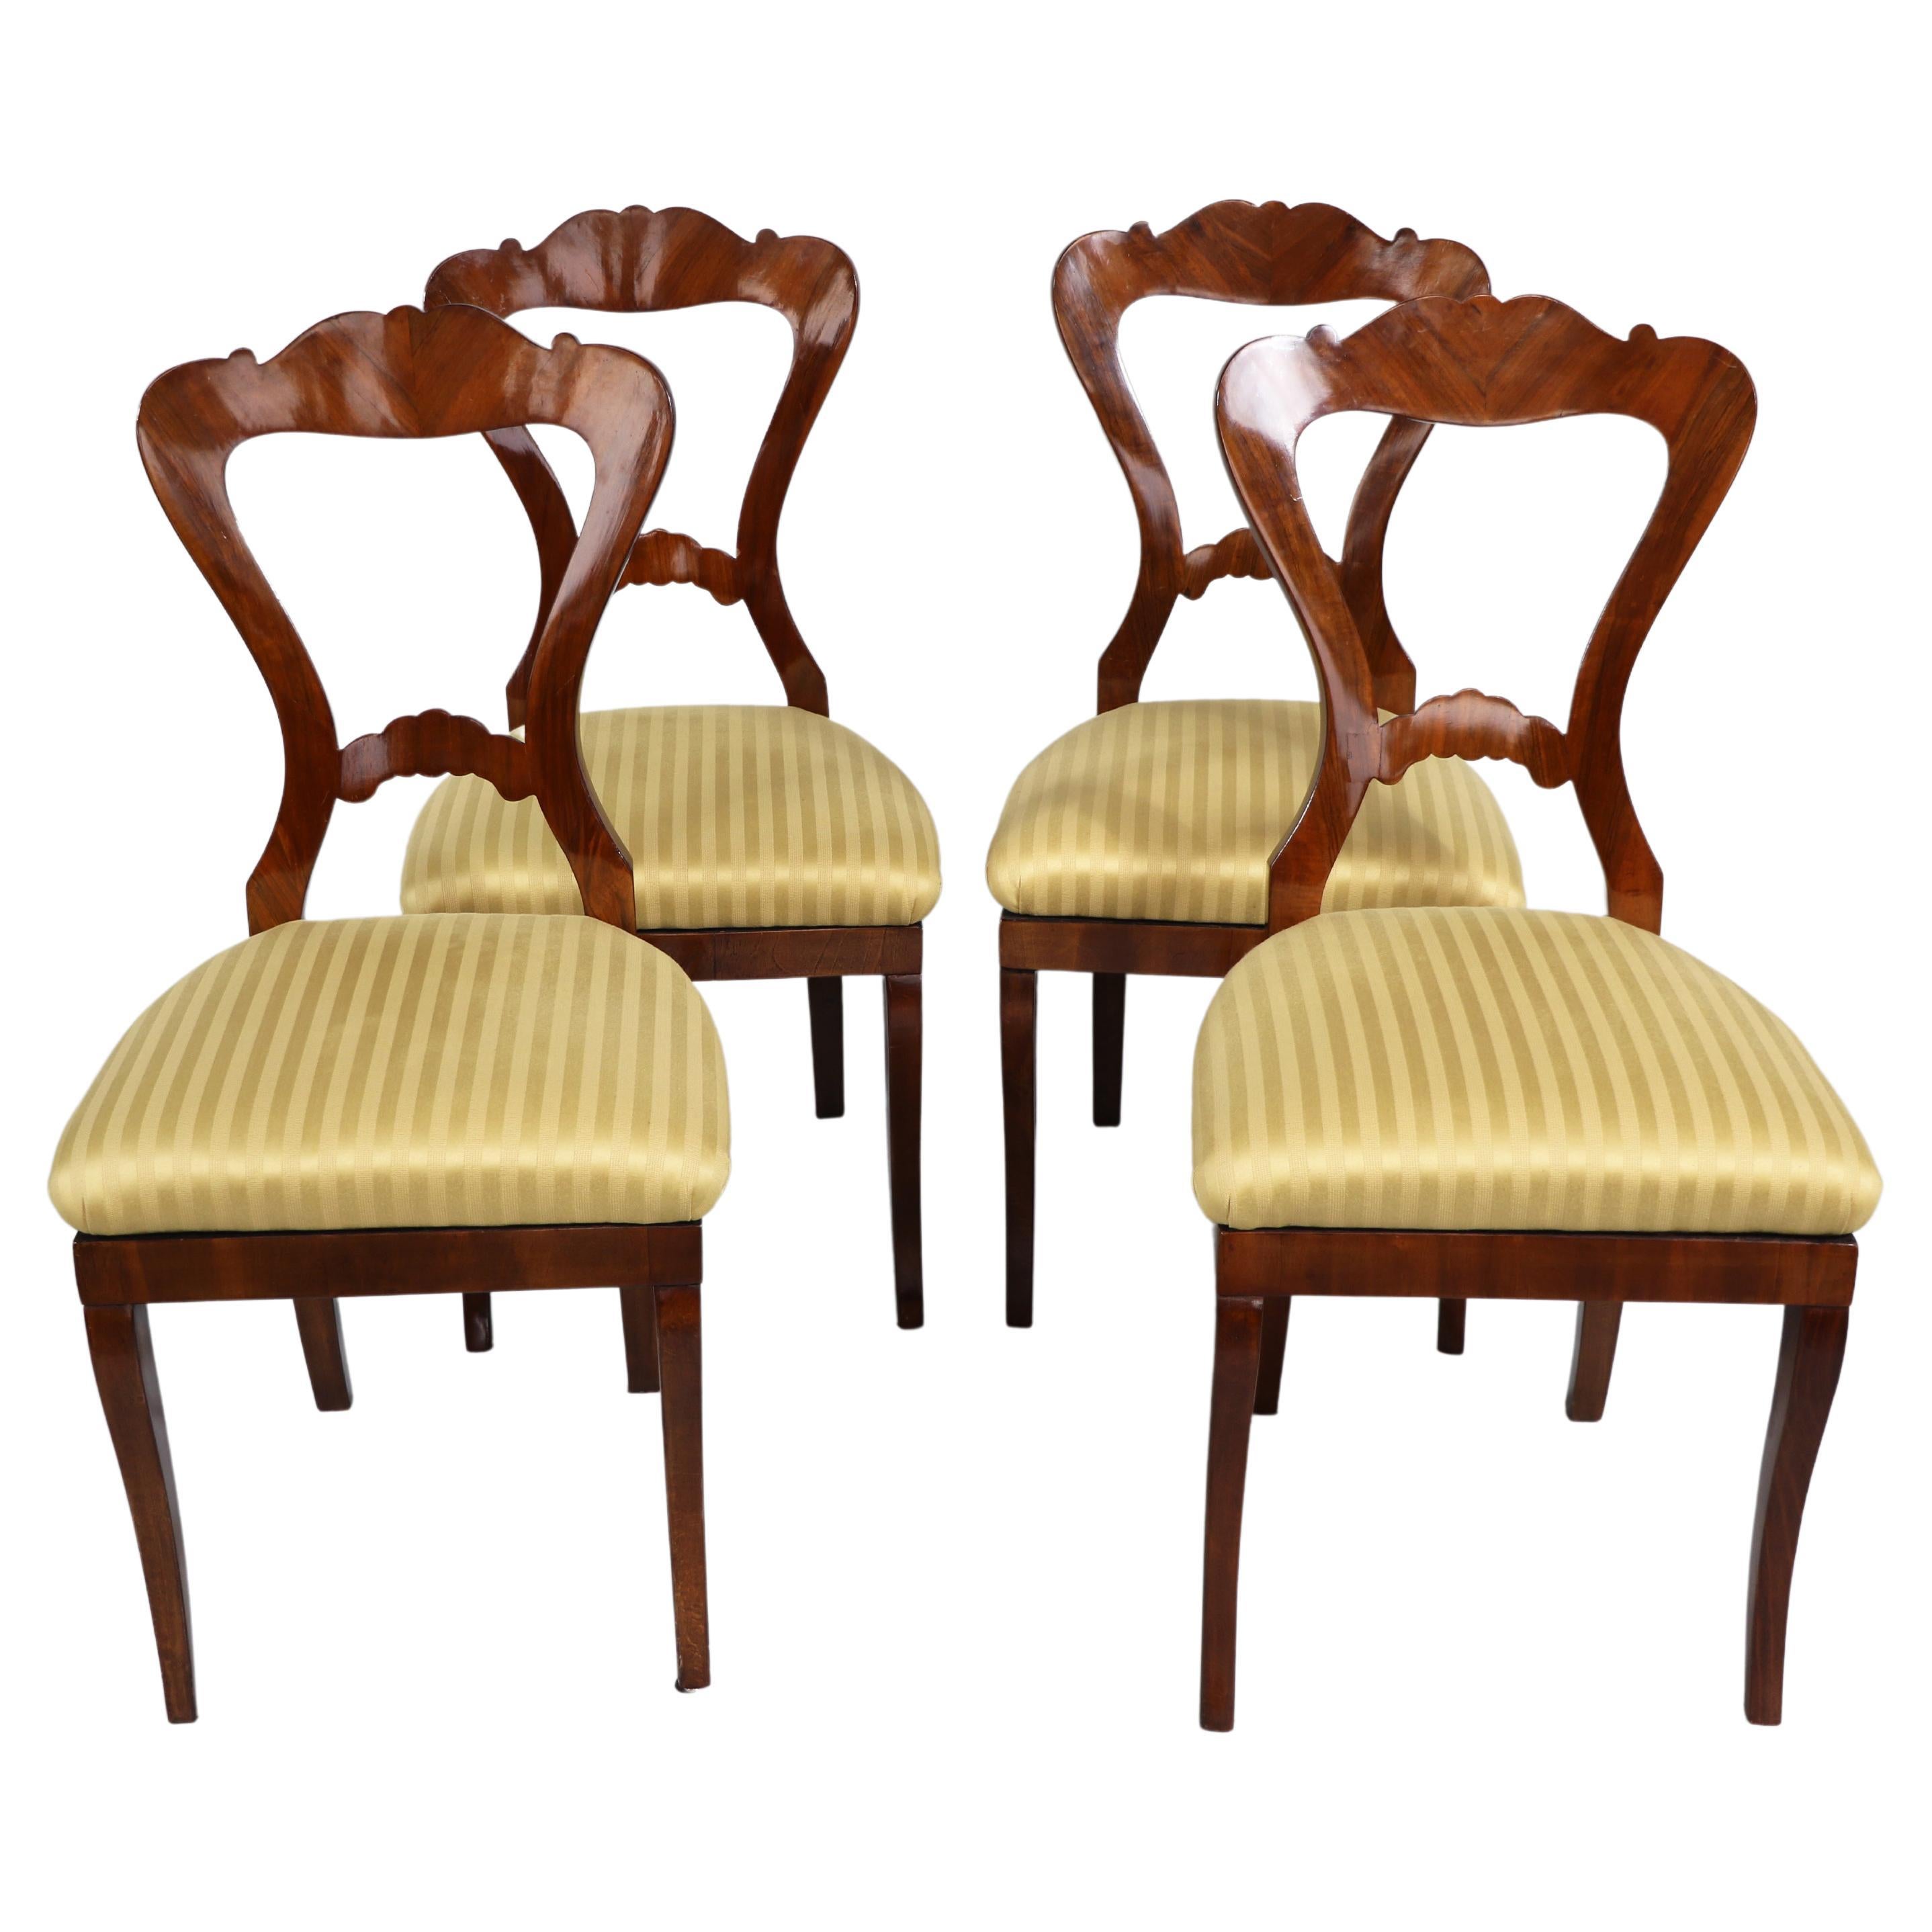 19th Century Set of Four Biedermeier Walnut Chairs. Vienna, c. 1825.